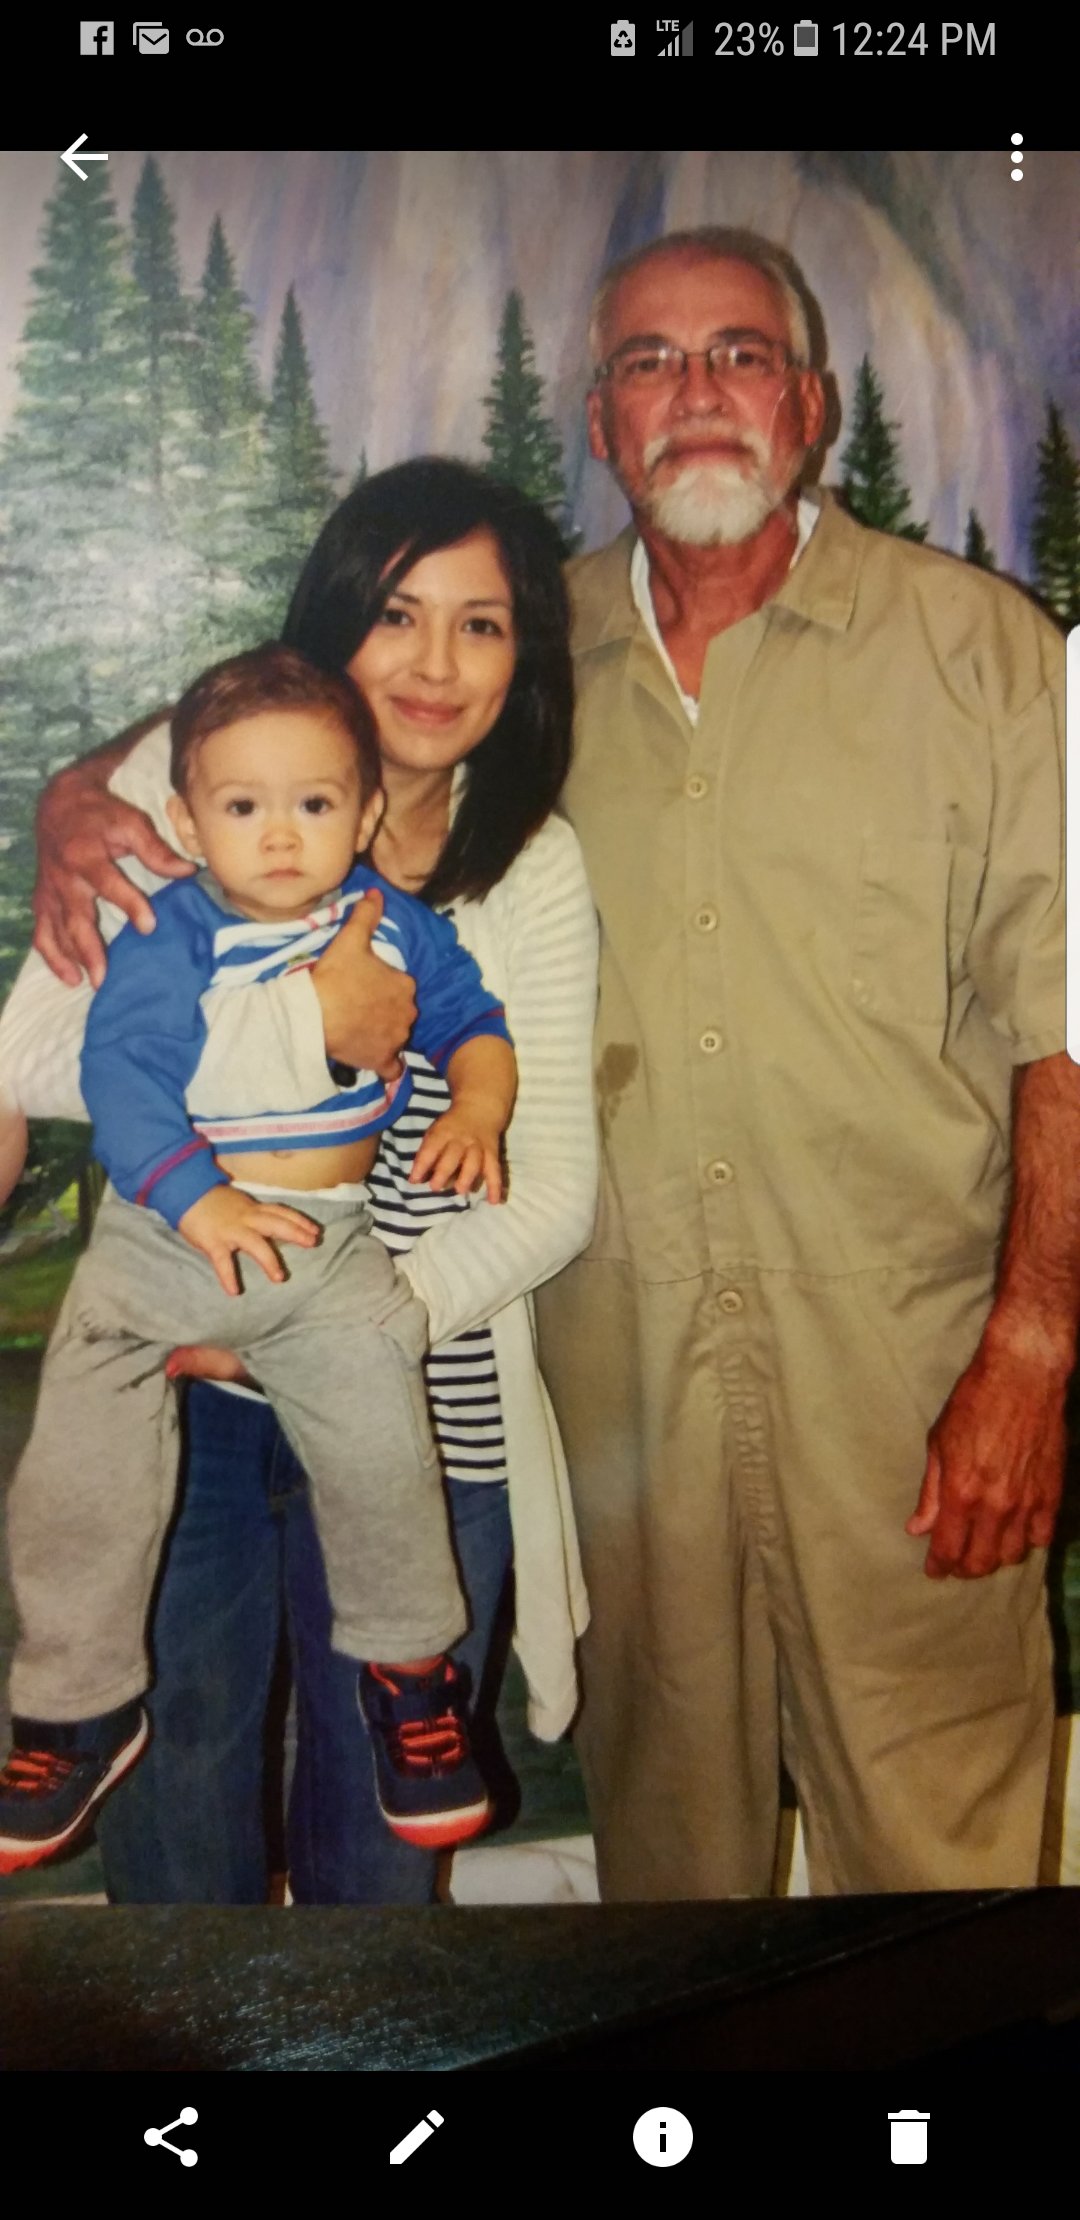 Pedro Moreno, Alejandra Lopez and her children, 2016 visit.